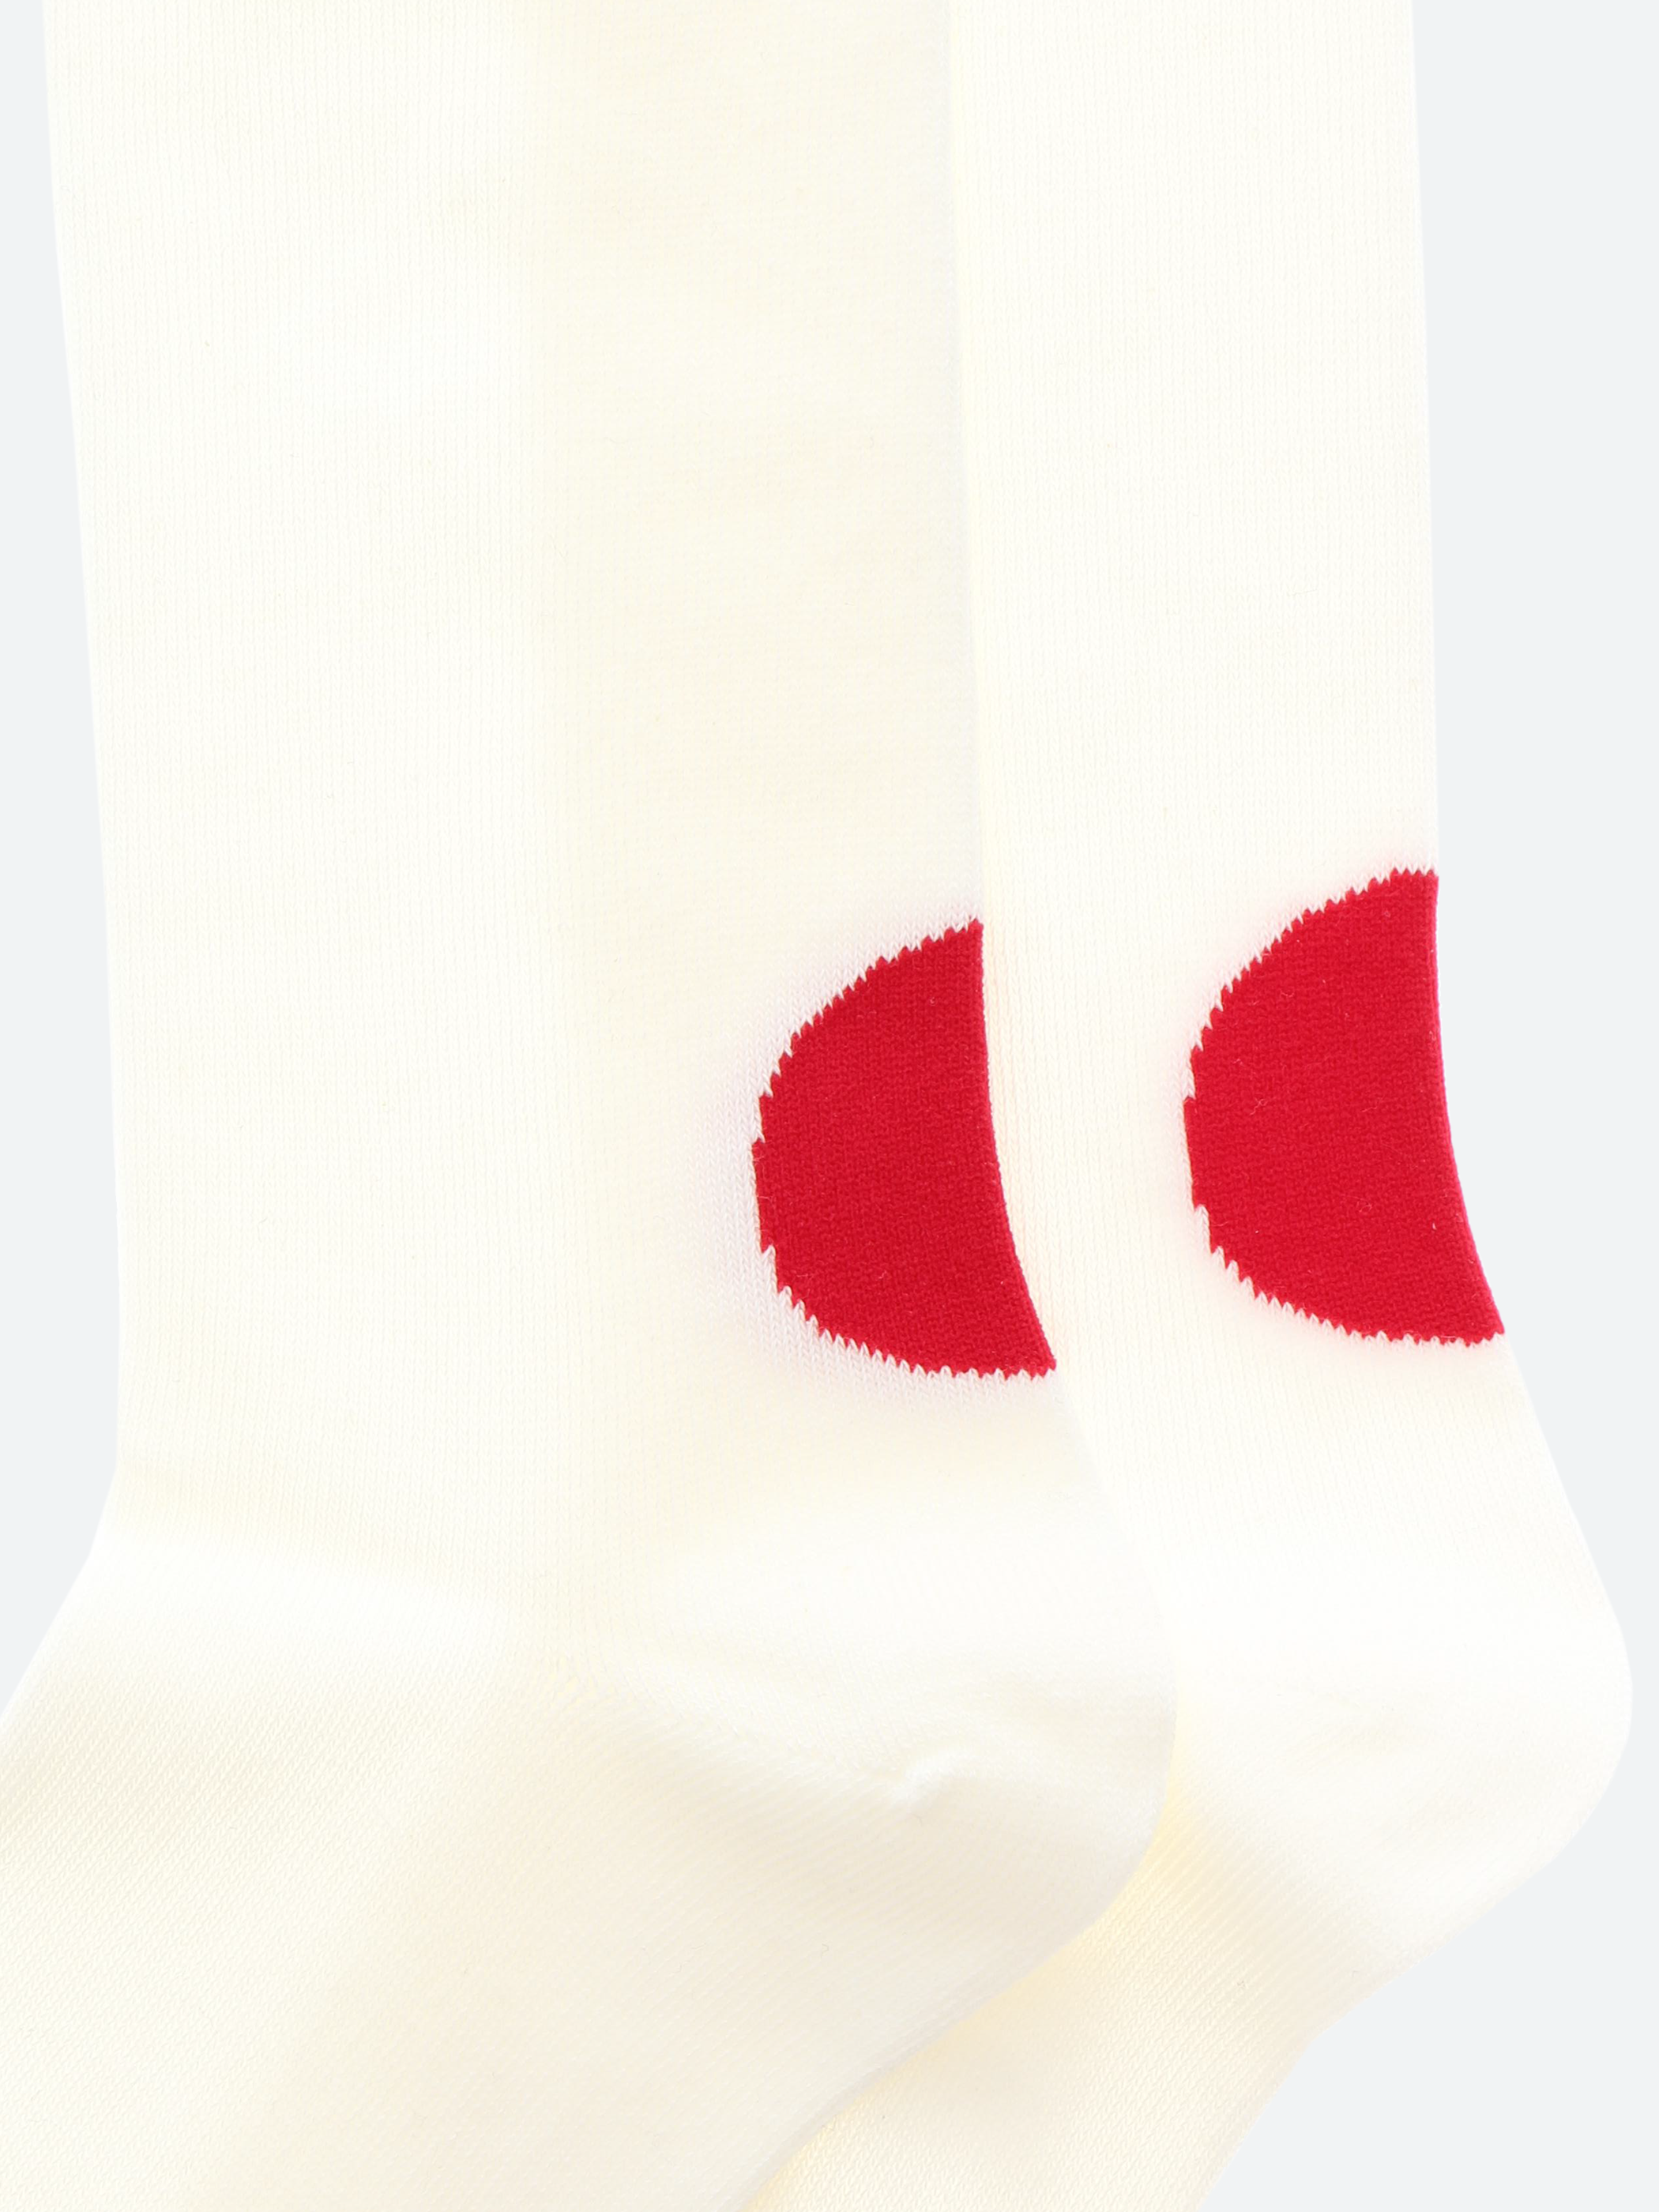 Back-Side Japan Flag Socks